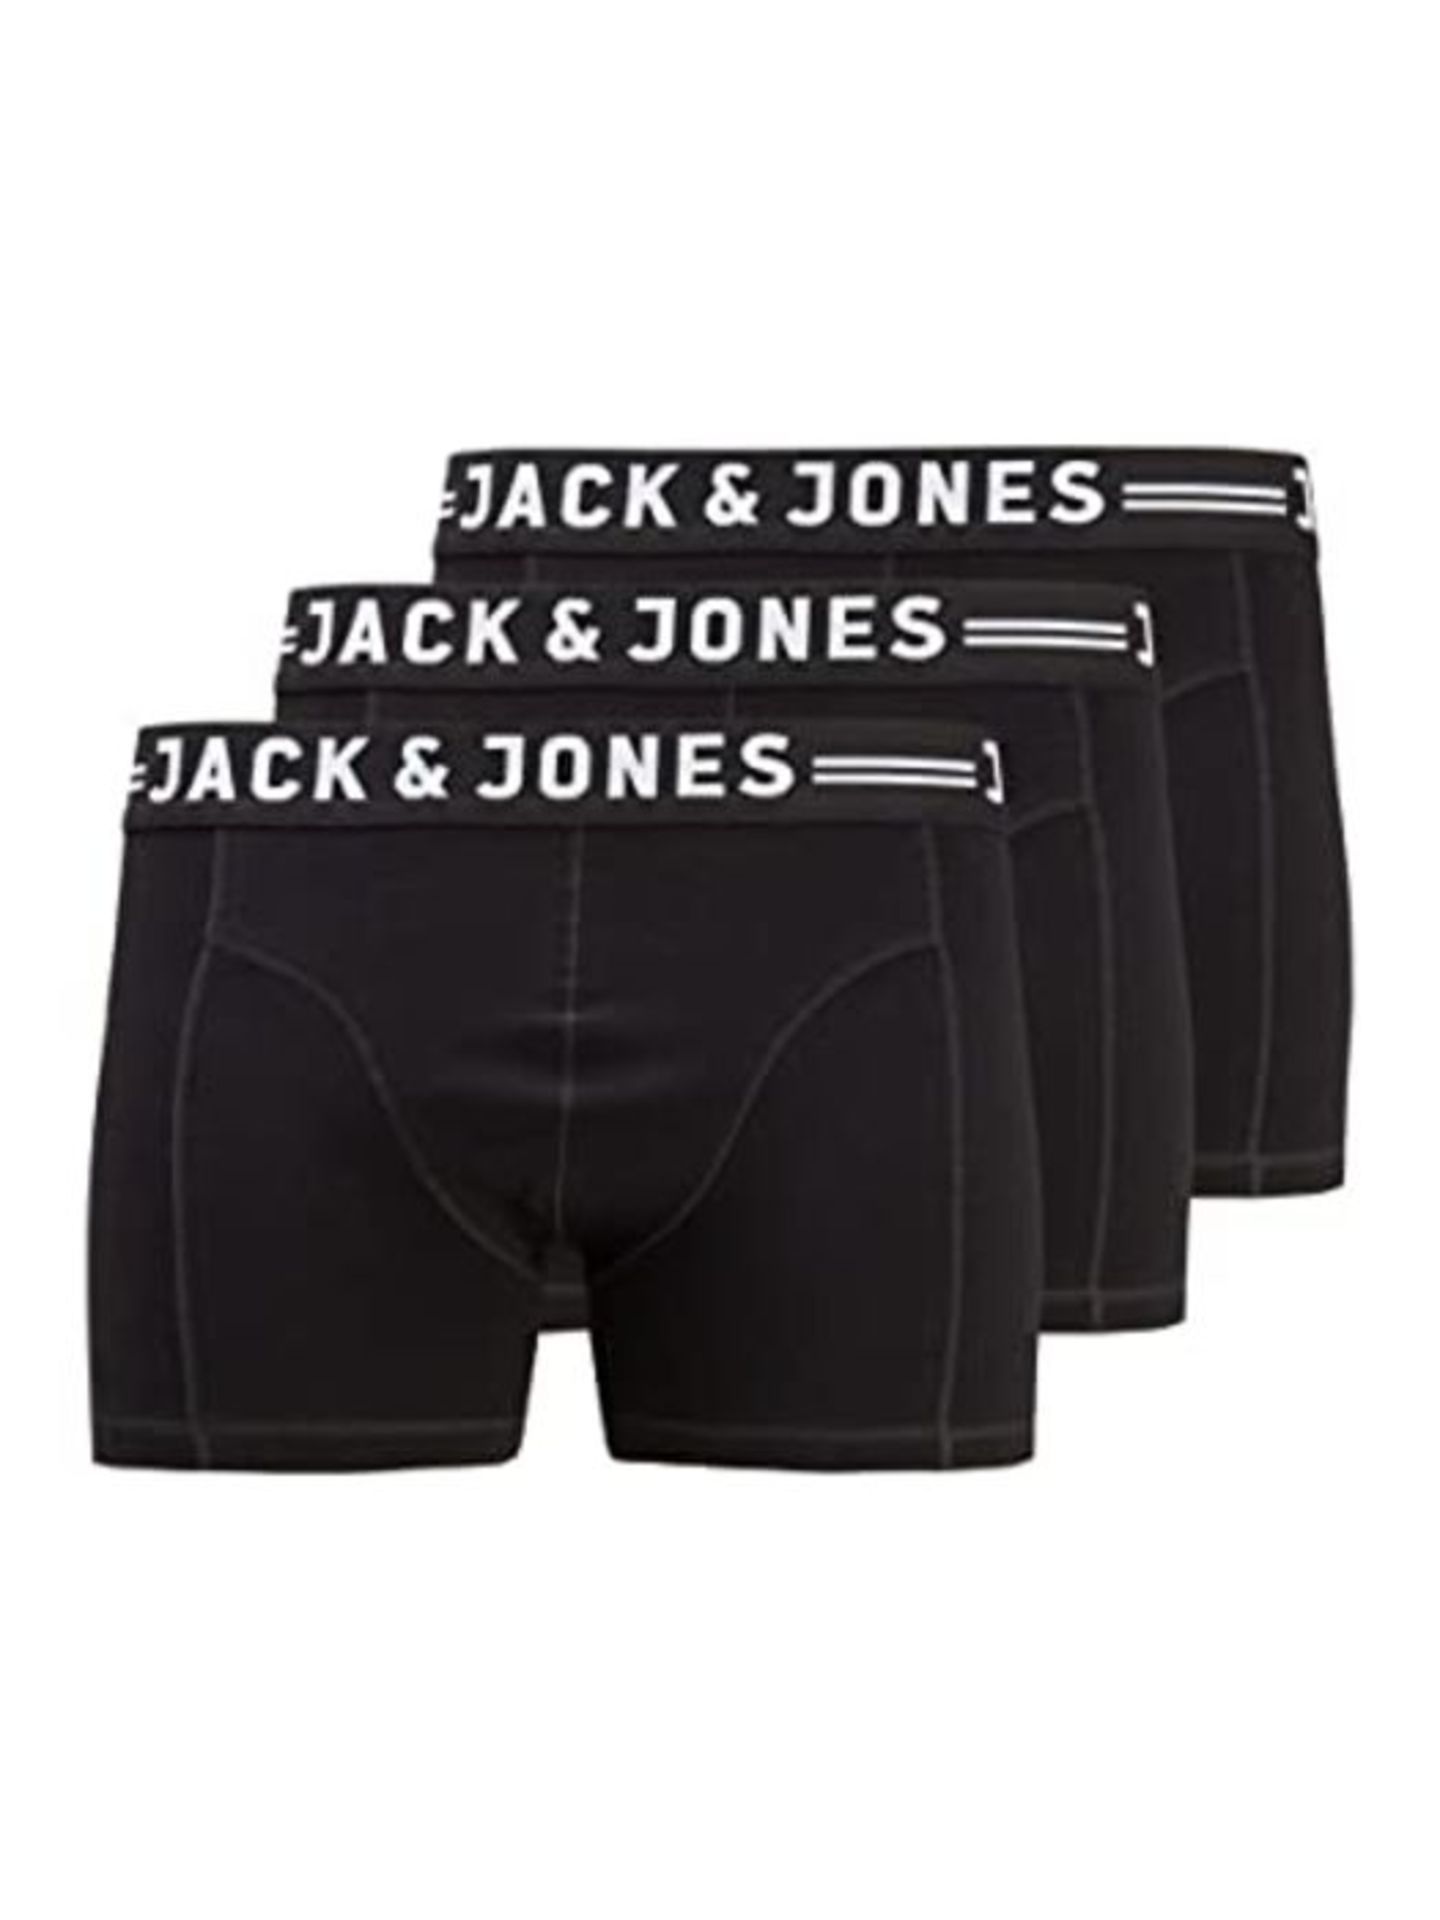 Jack and Jones Mens 3 Pack Trunks Plus Size